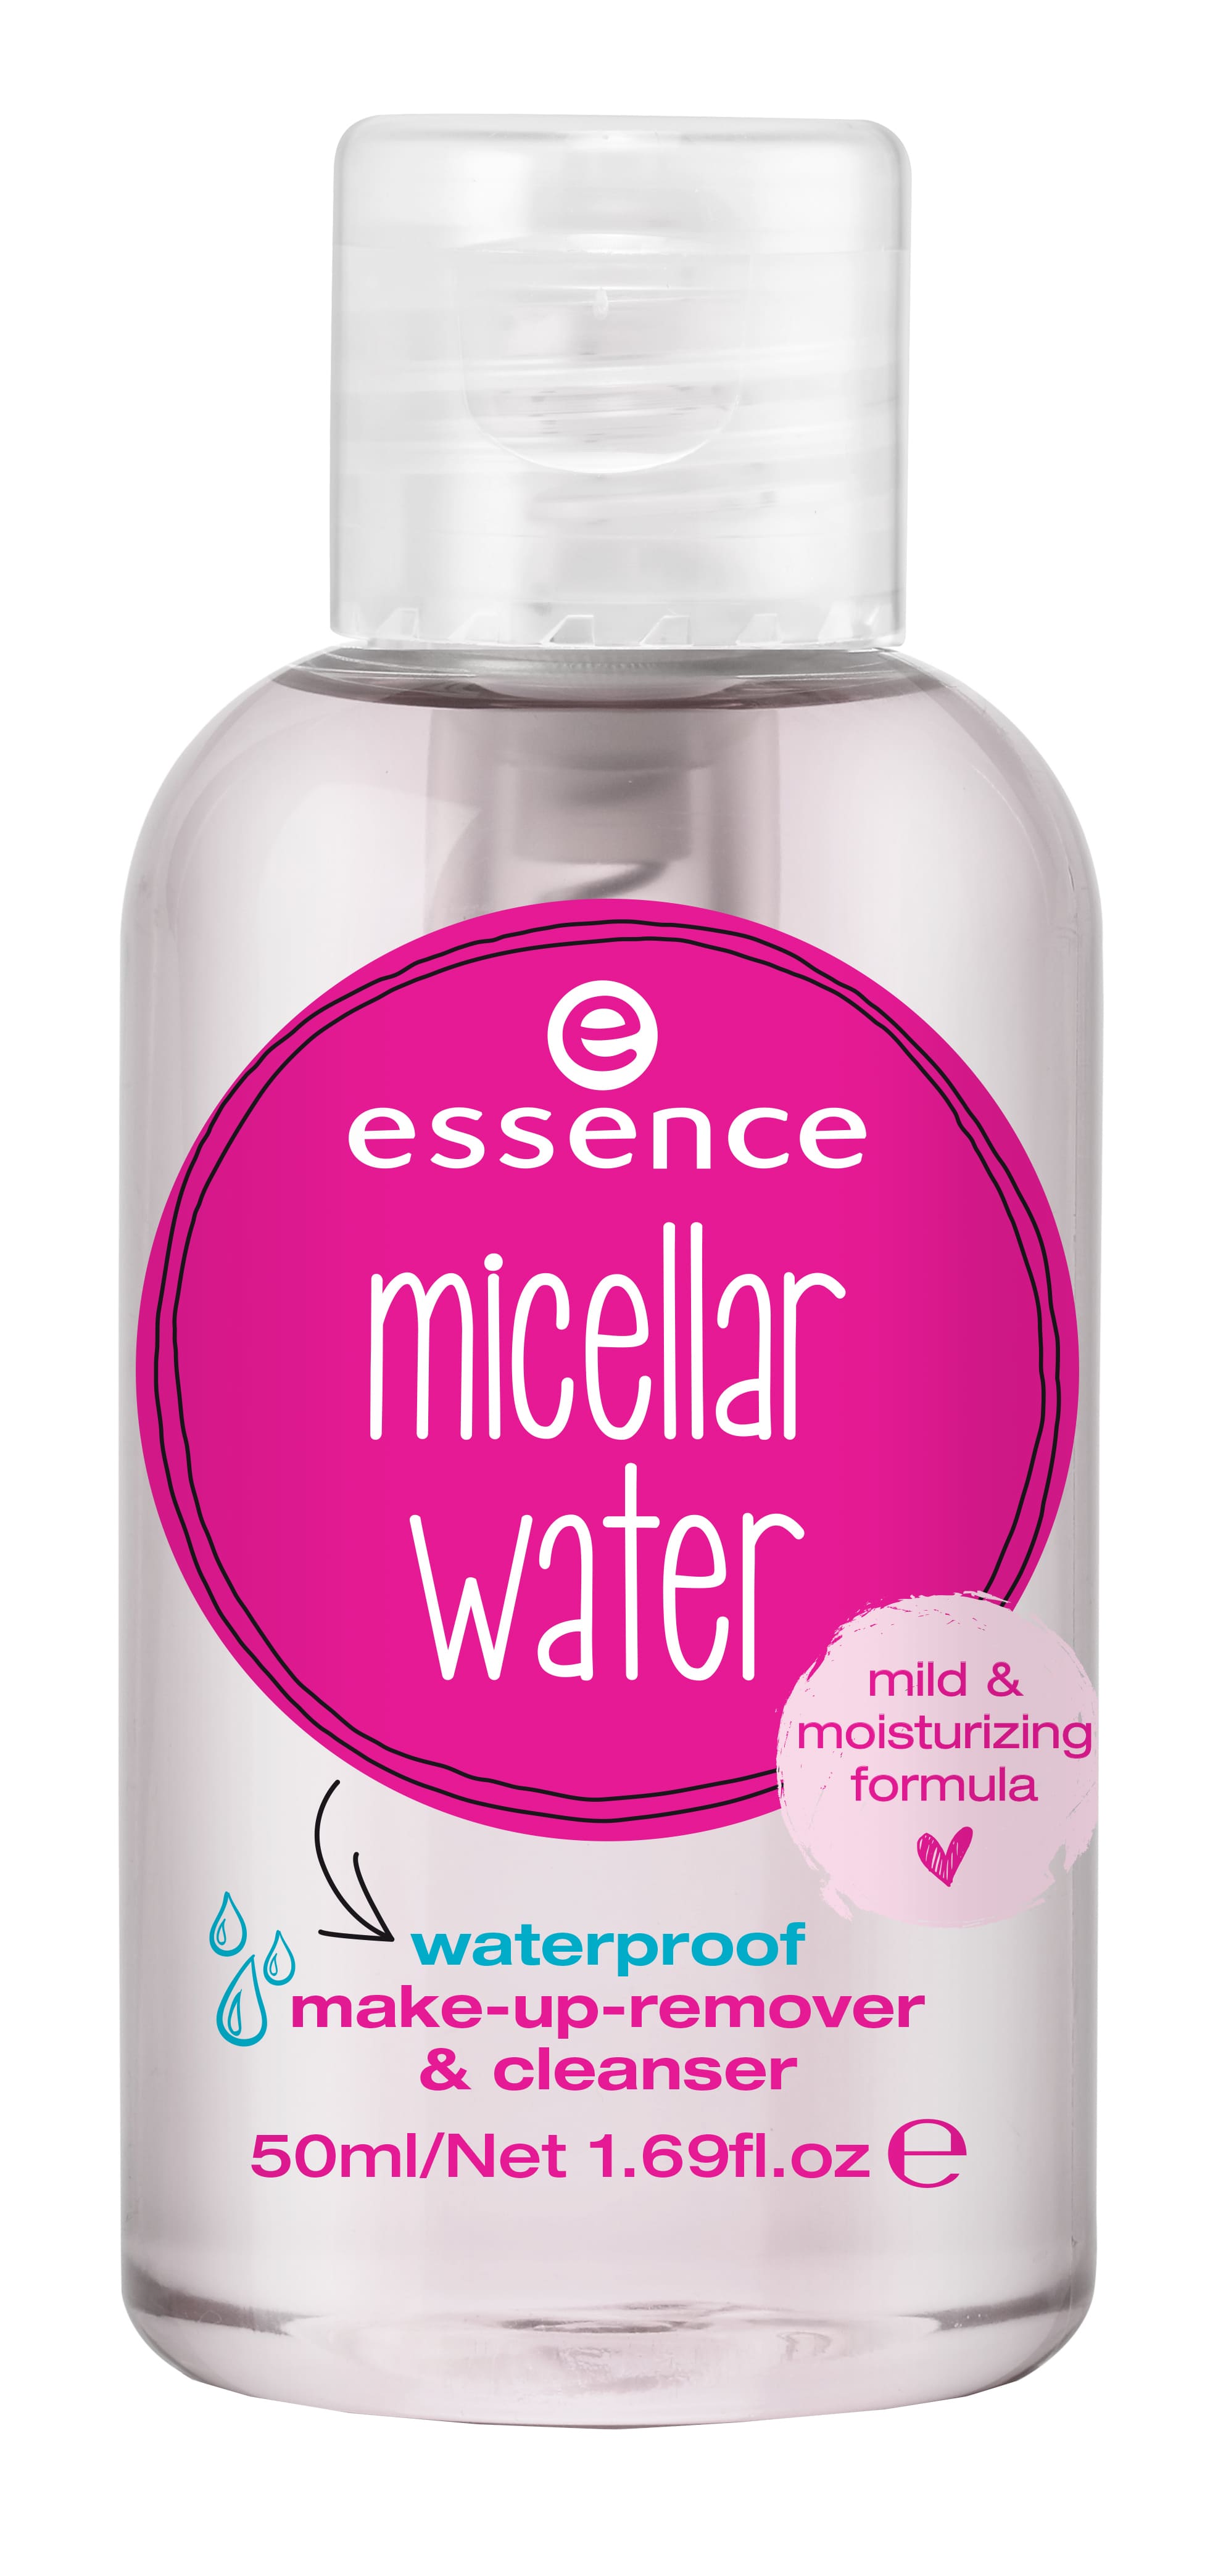 Essence new. Эсенсес. Косметика Essence для лица. Мицеллярная вода Эссенс. Эссенция воды.